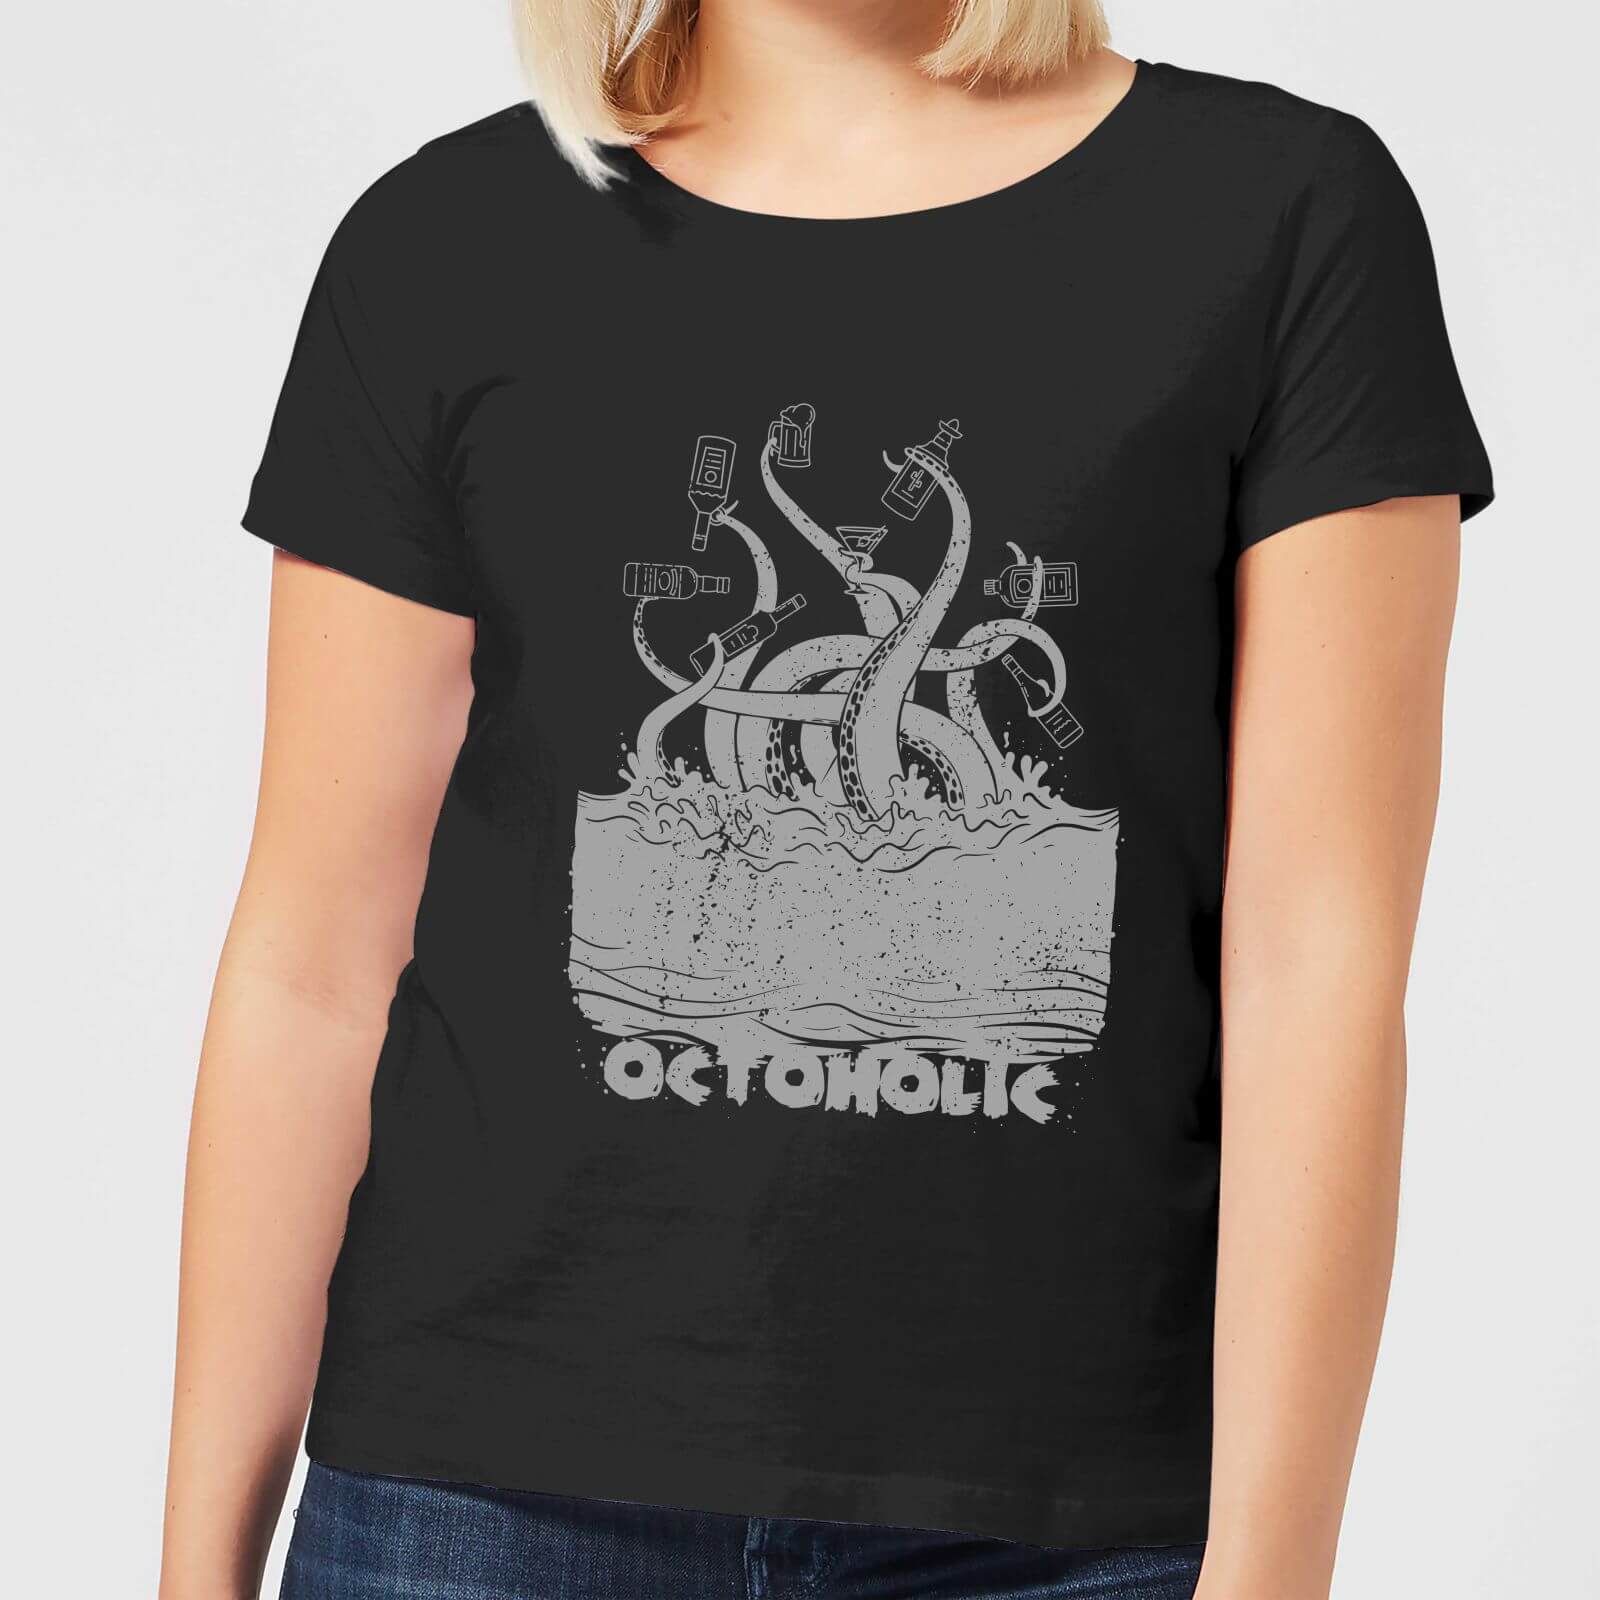 Beershield Octoholic Women's T-Shirt - Black - 4XL - Black